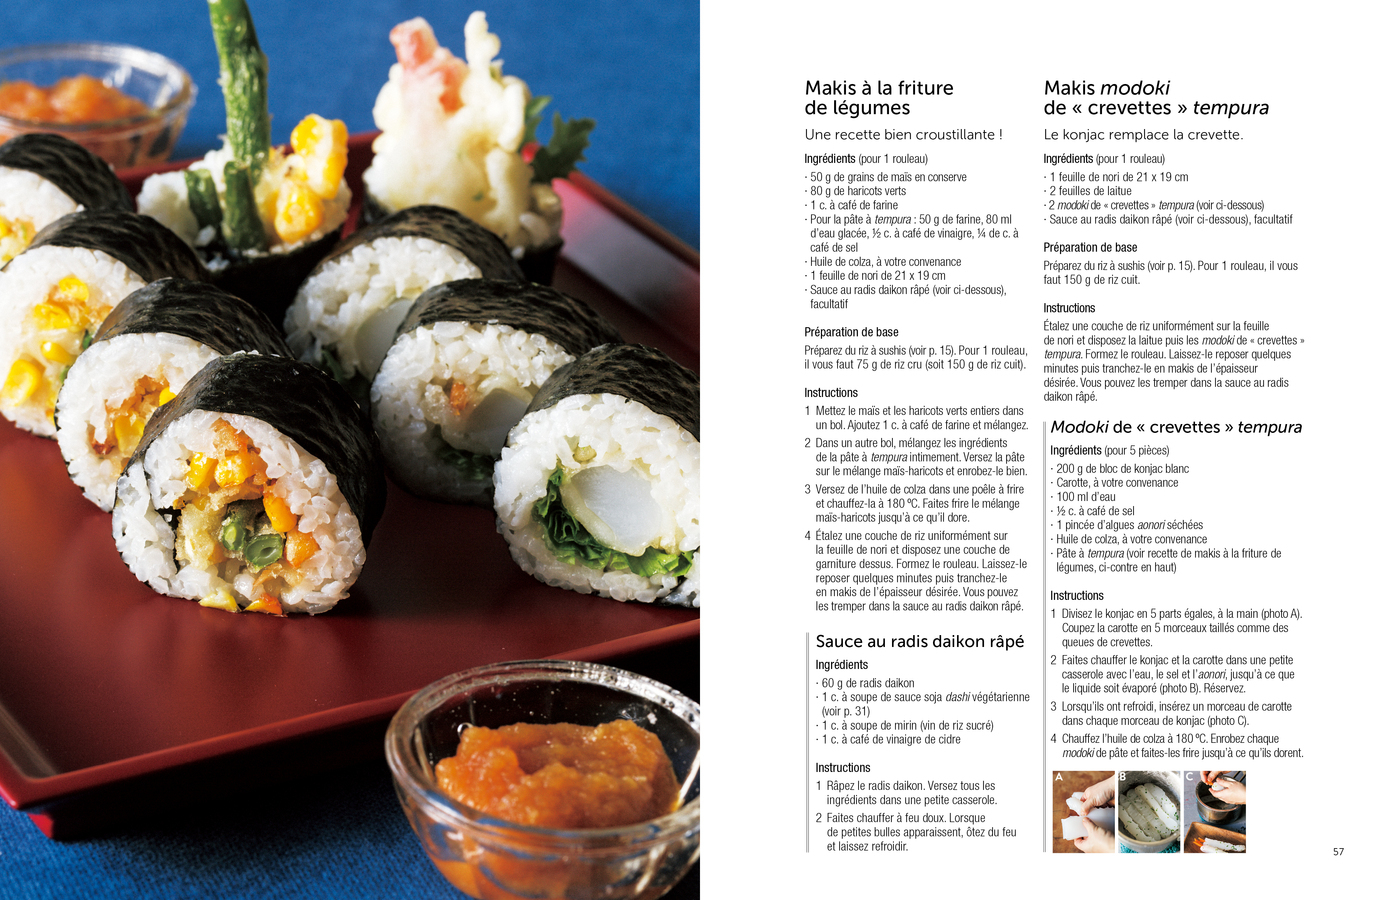 Sushi Modoki by Iina, La Plage editions: inside page